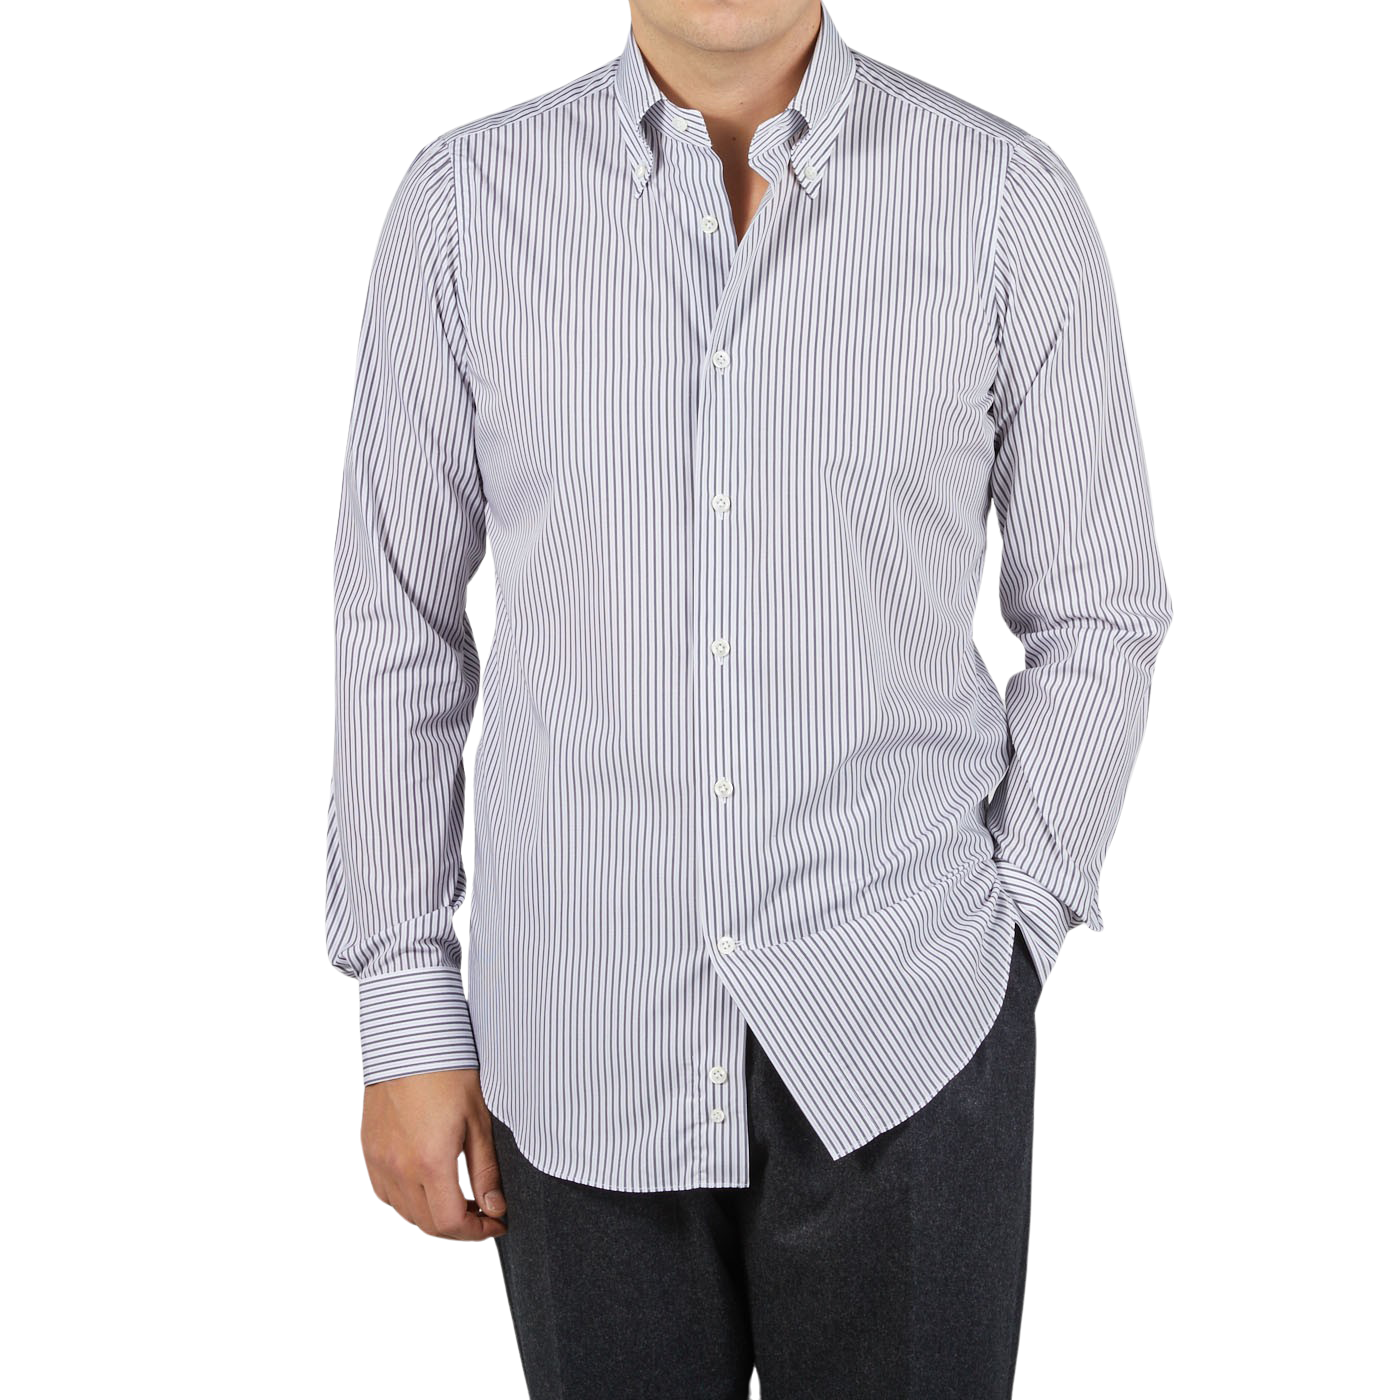 Mazzarelli, an Italian shirtmaker, creates a stylish White Grey Vintage Striped Cotton BD Slim Shirt for a man.